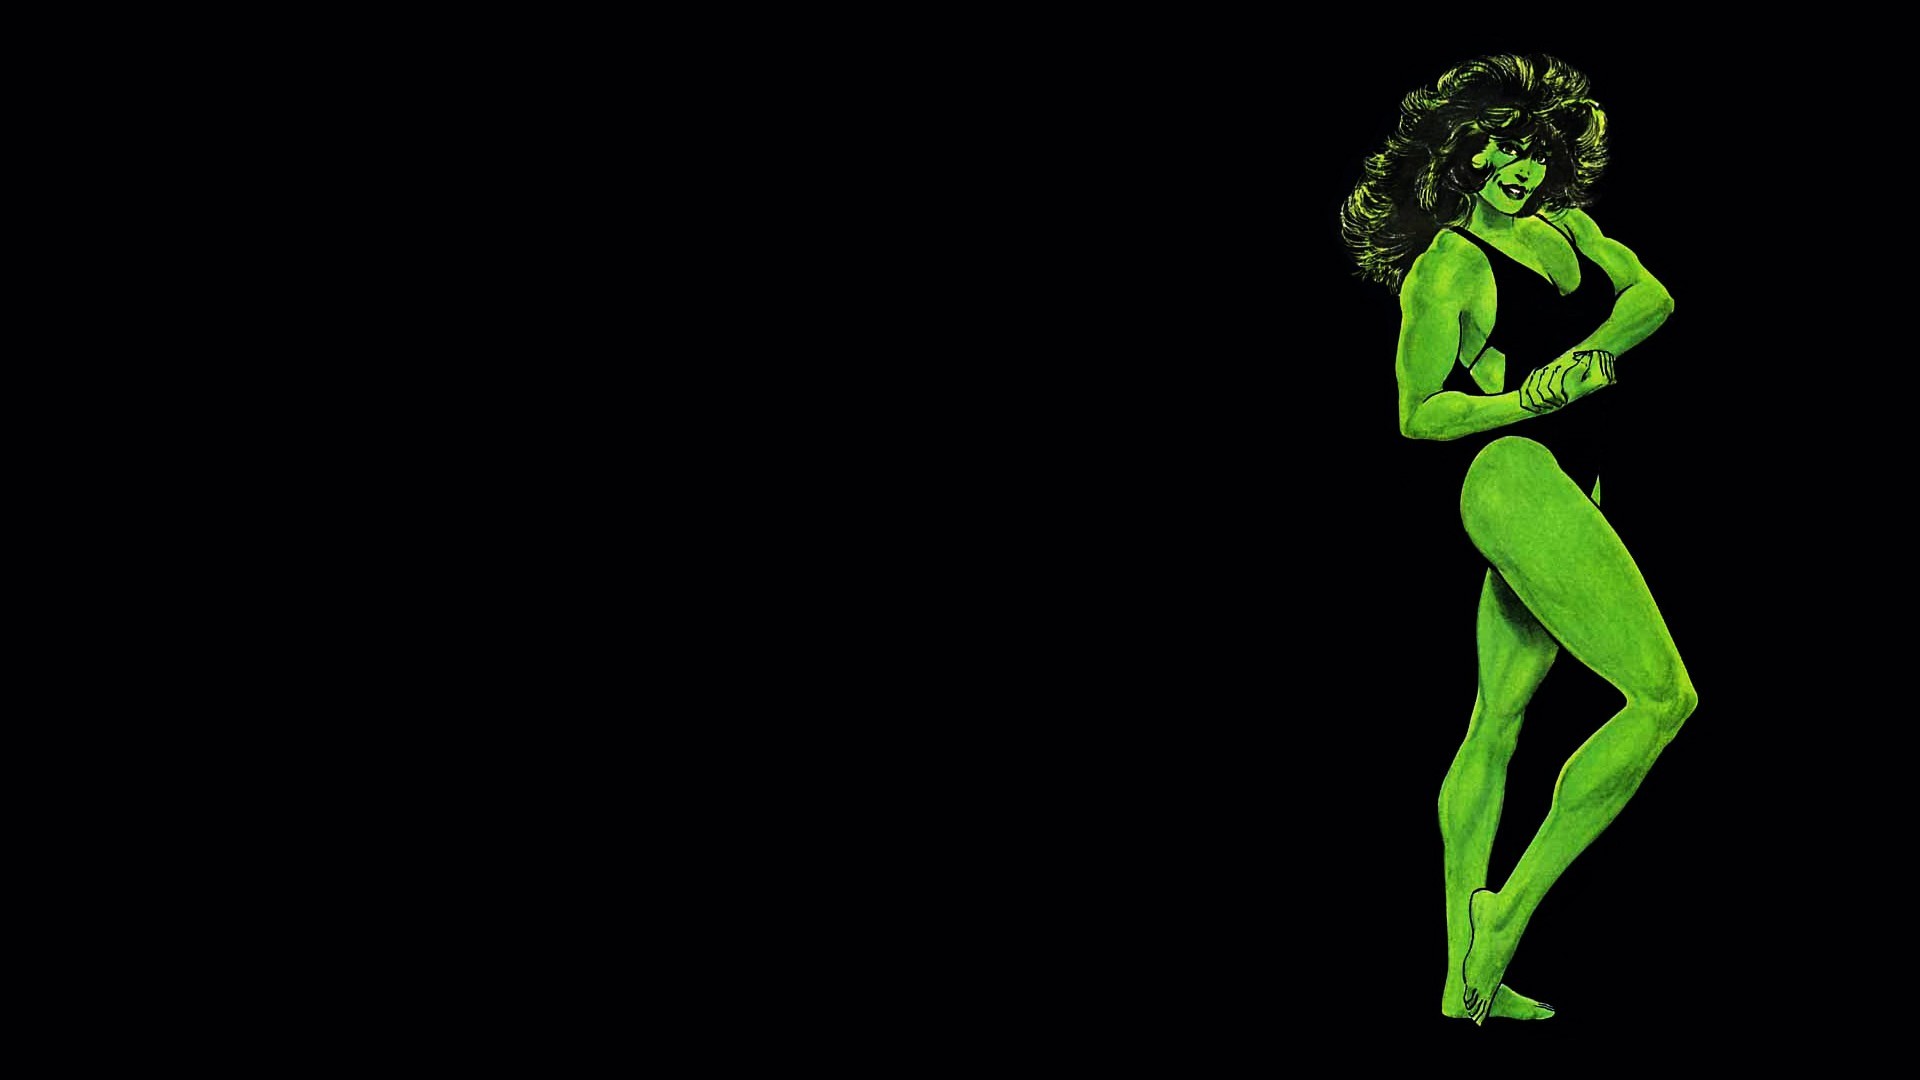 Marvel Superheroines Images She Hulk Wallpaper And  Shehulk Transparent  PNG  338x822  Free Download on NicePNG